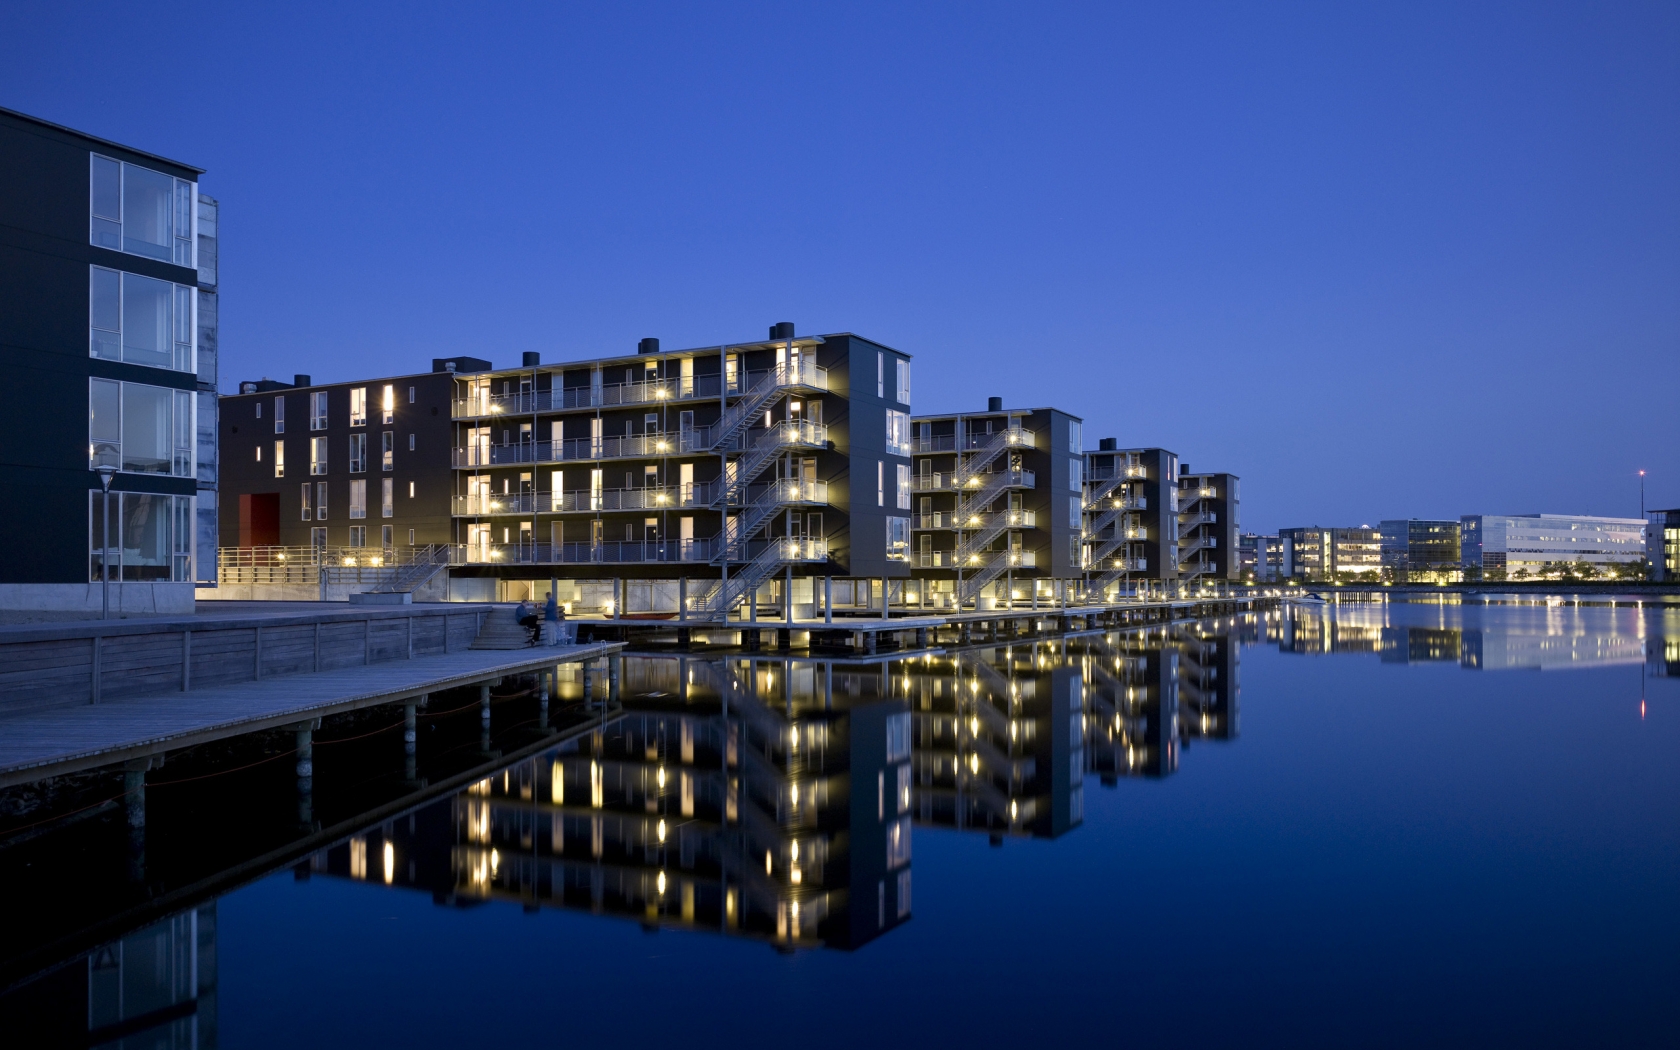 Teglvrkshavnen Block in Copenhagen for 1680 x 1050 widescreen resolution